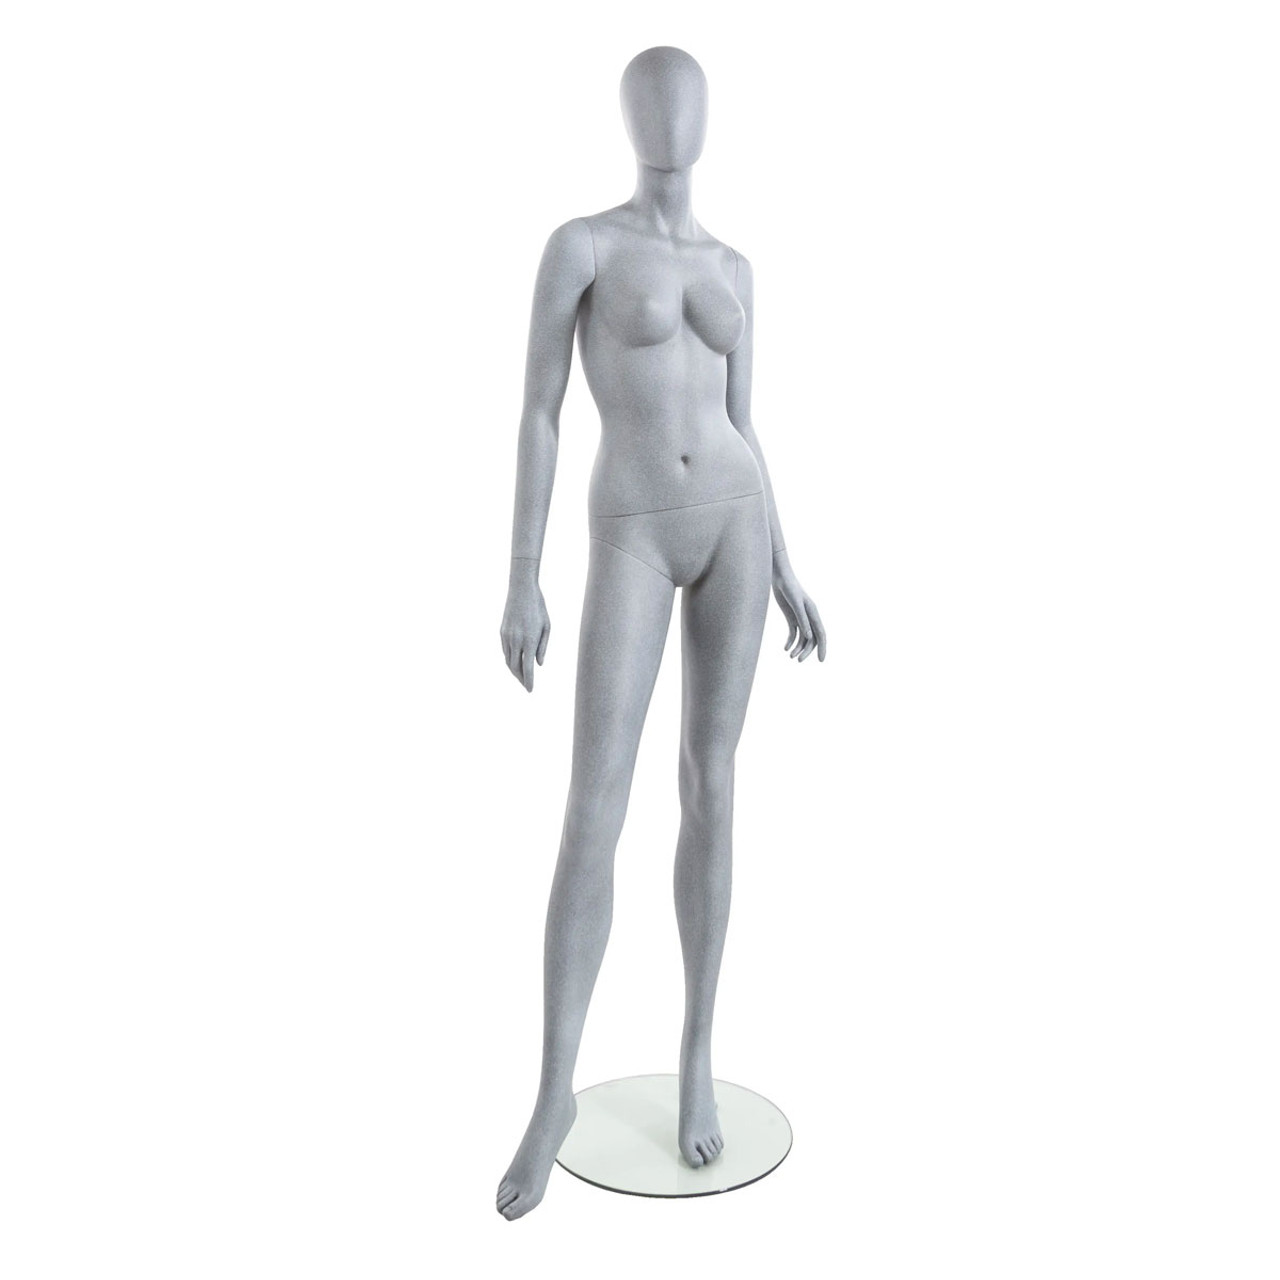 Black Female Handstand Pose Yoga Mannequin MM-YOGA04BK - Mannequin Mall